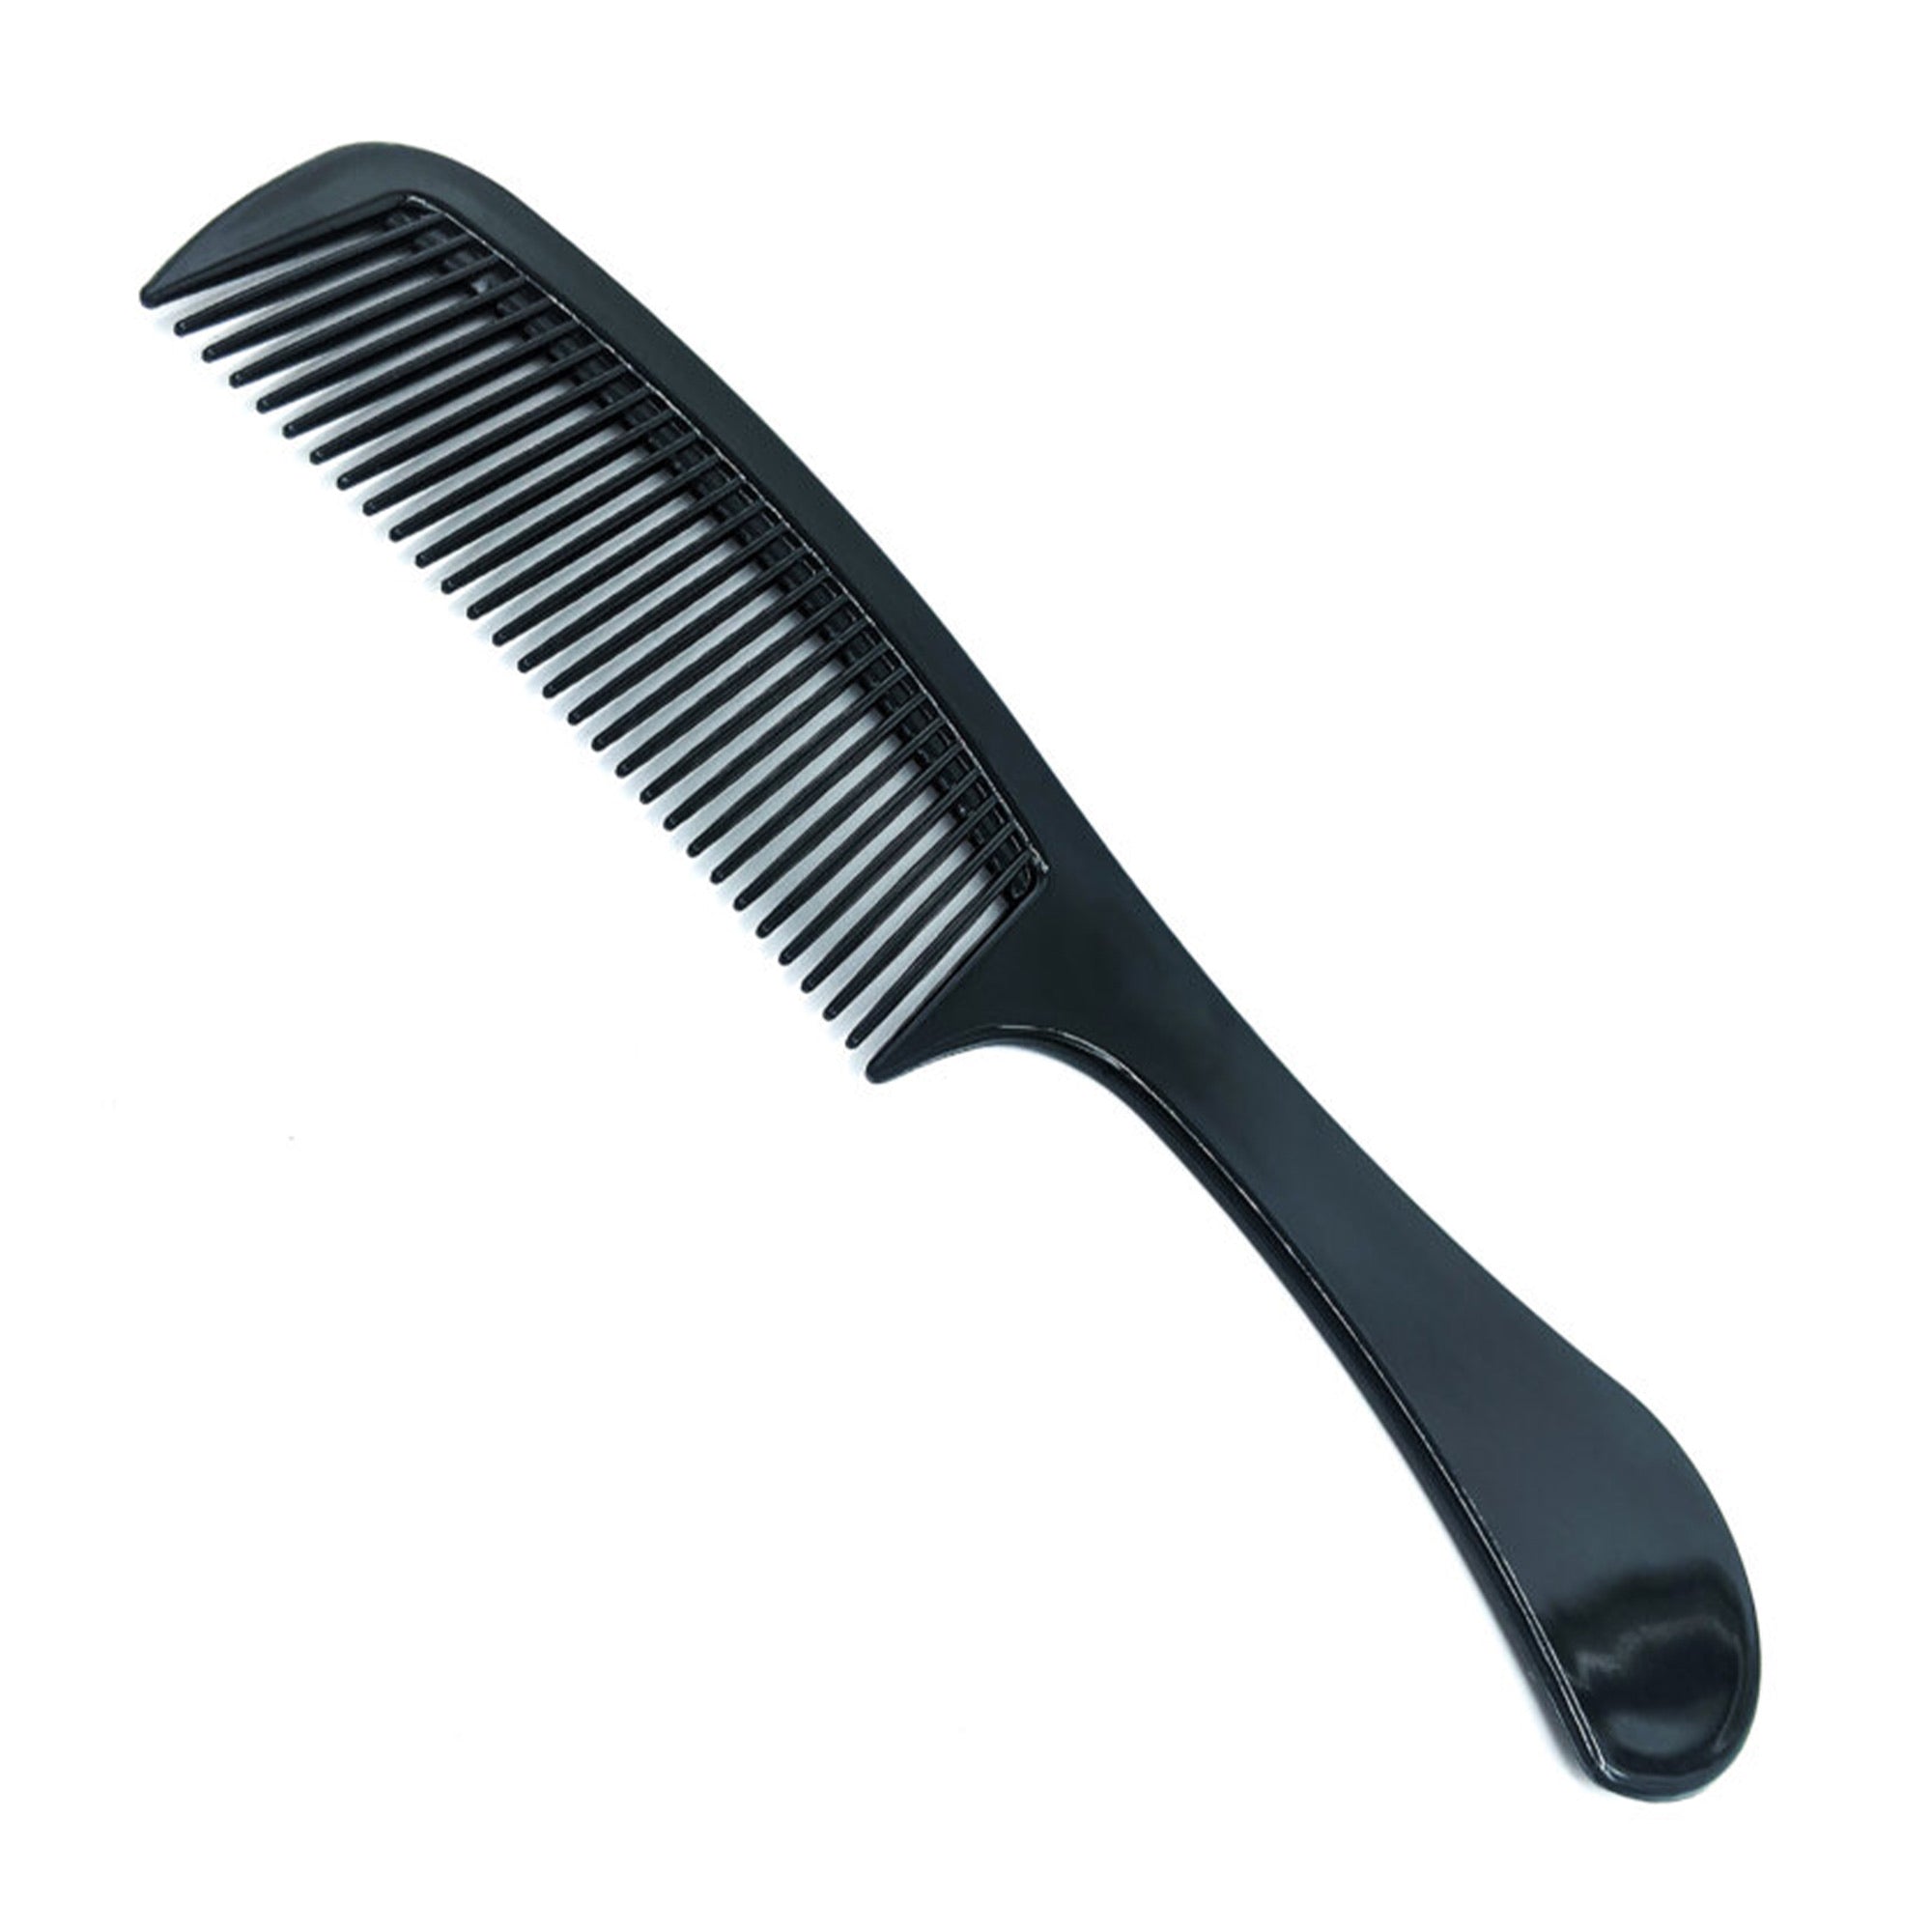 Gabri - Hair Detangler Comb Comfortable Hard Rubber Handle No.2306 21cm